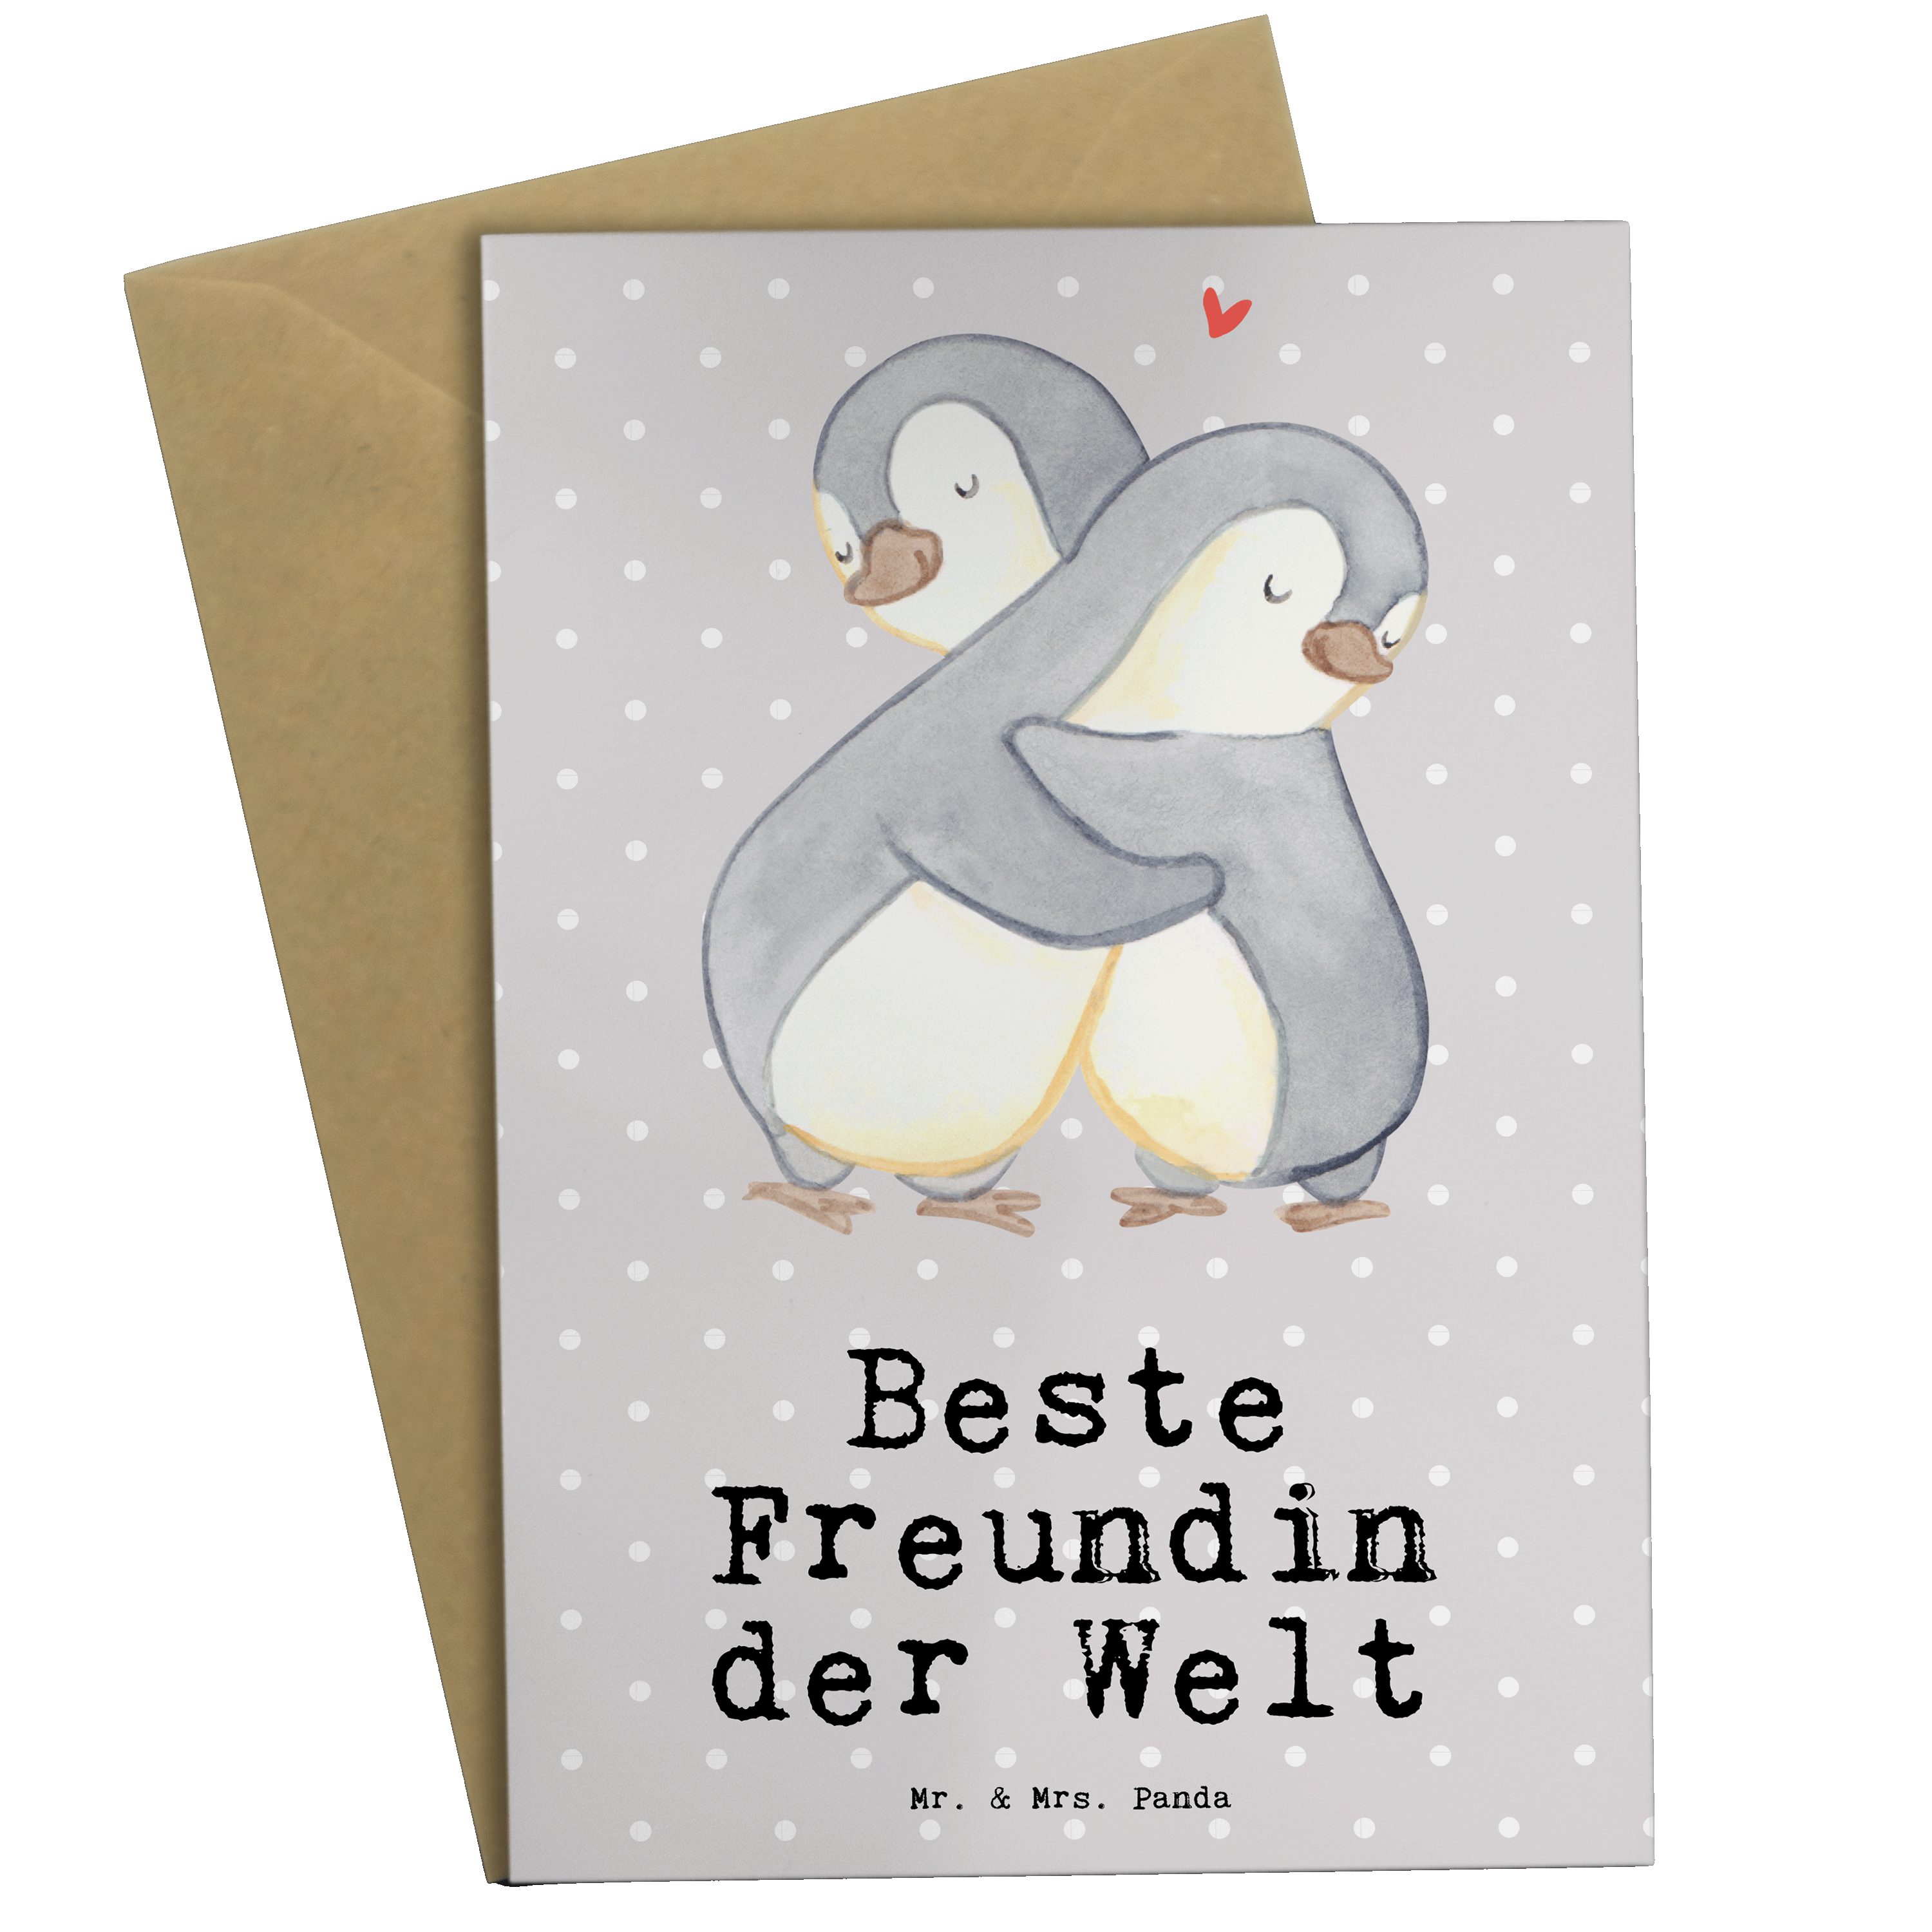 Grau Pastell Beste Pinguin Panda Grußkarte & Mr. Hoc Mrs. Danke, Freundin Welt der - Geschenk, -